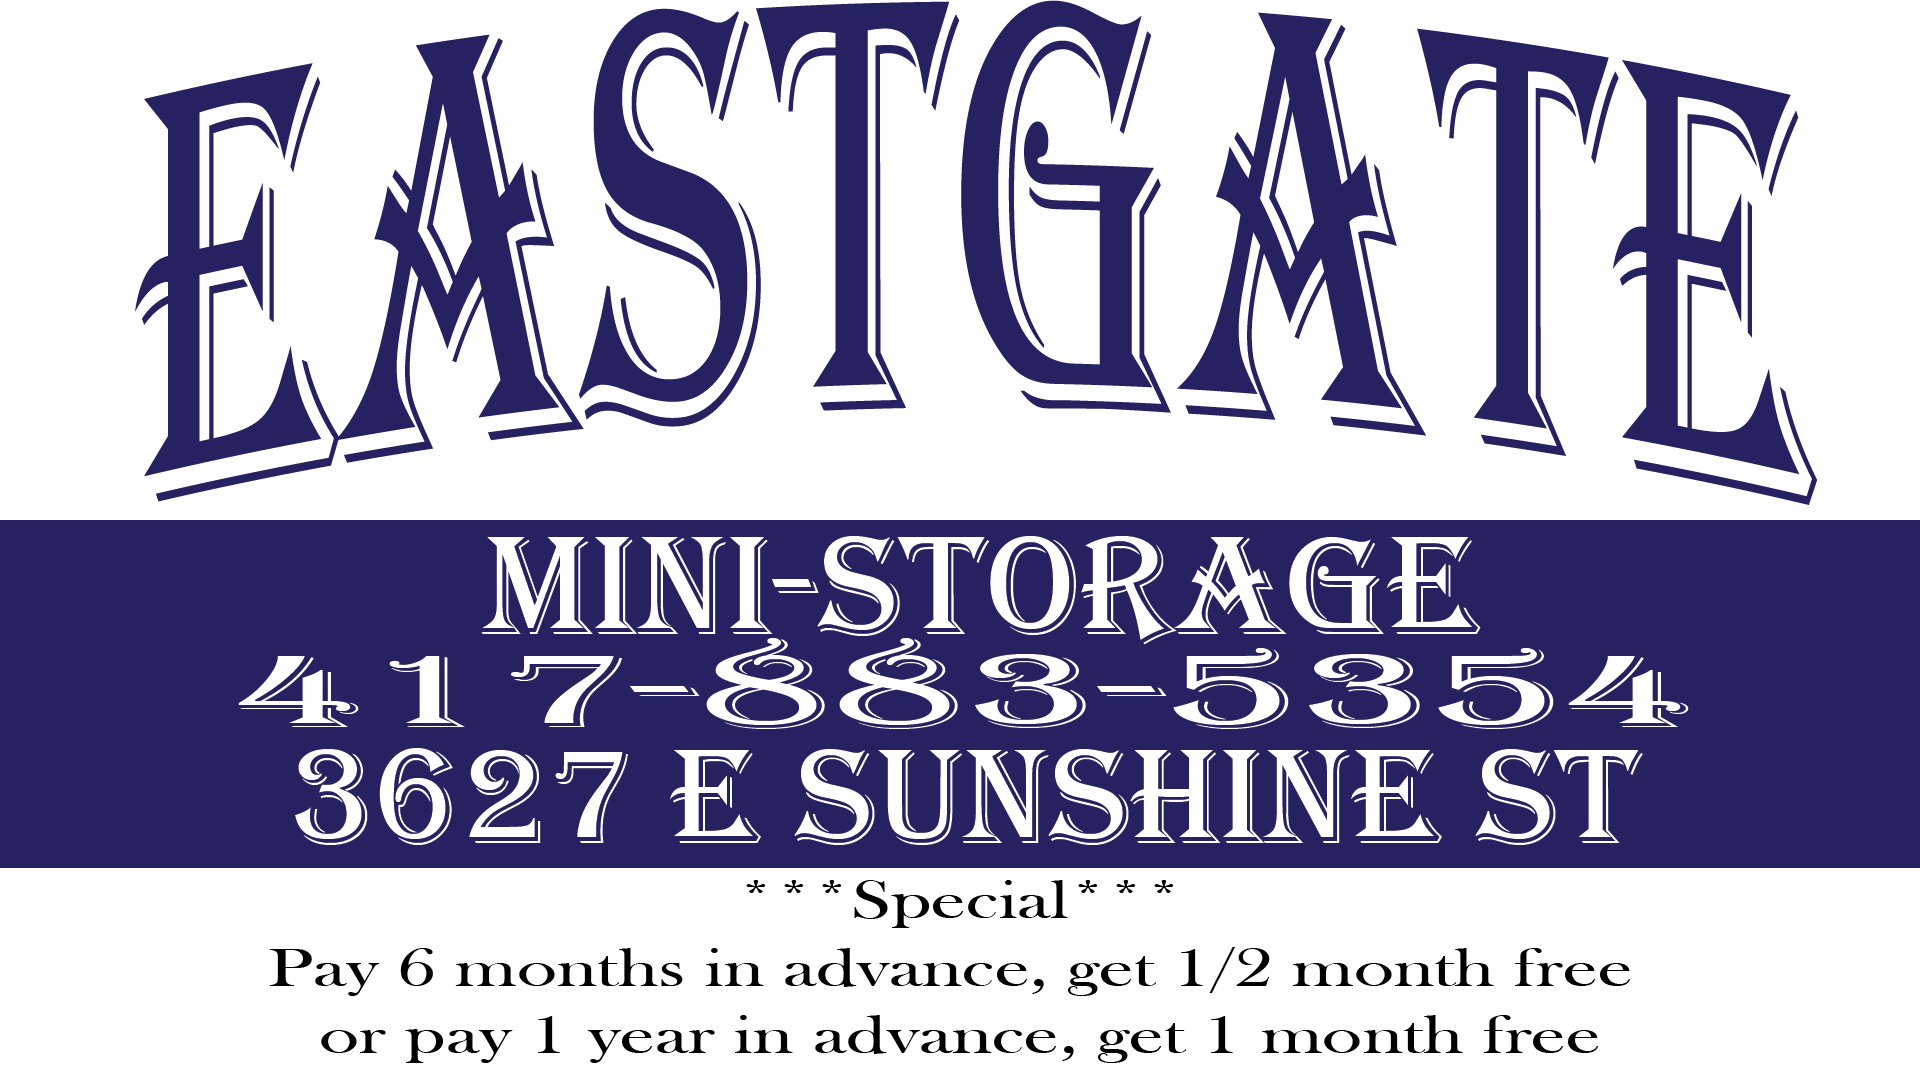 Eastgate Mini Storage